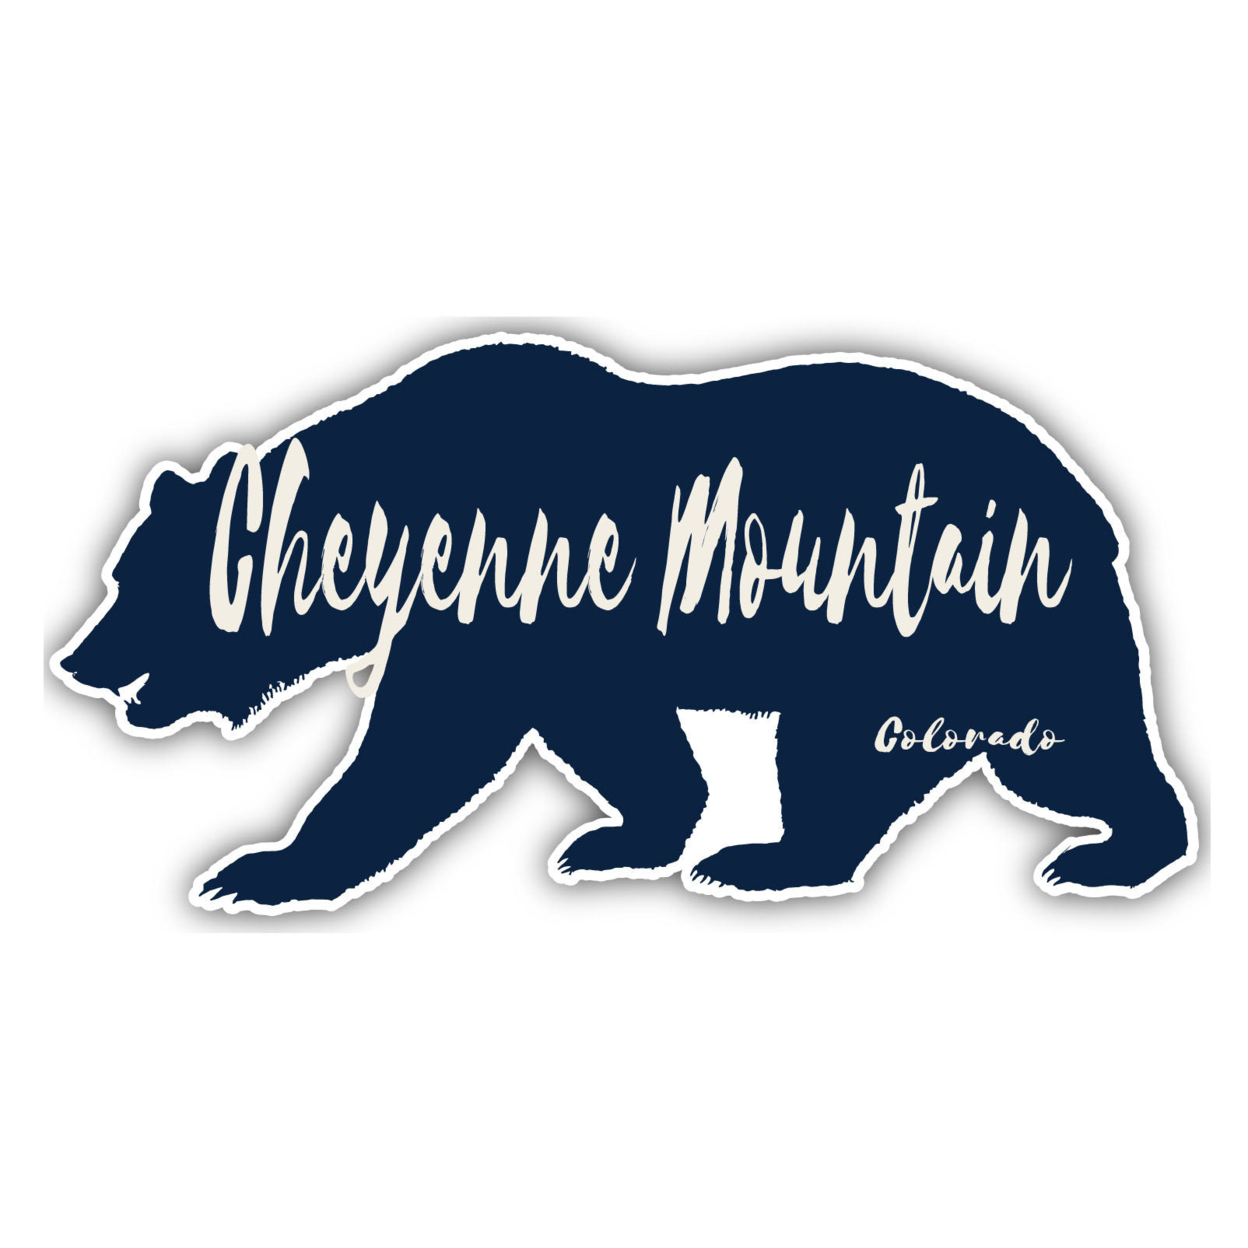 Cheyenne Mountain Colorado Souvenir Decorative Stickers (Choose Theme And Size) - 4-Pack, 12-Inch, Bear